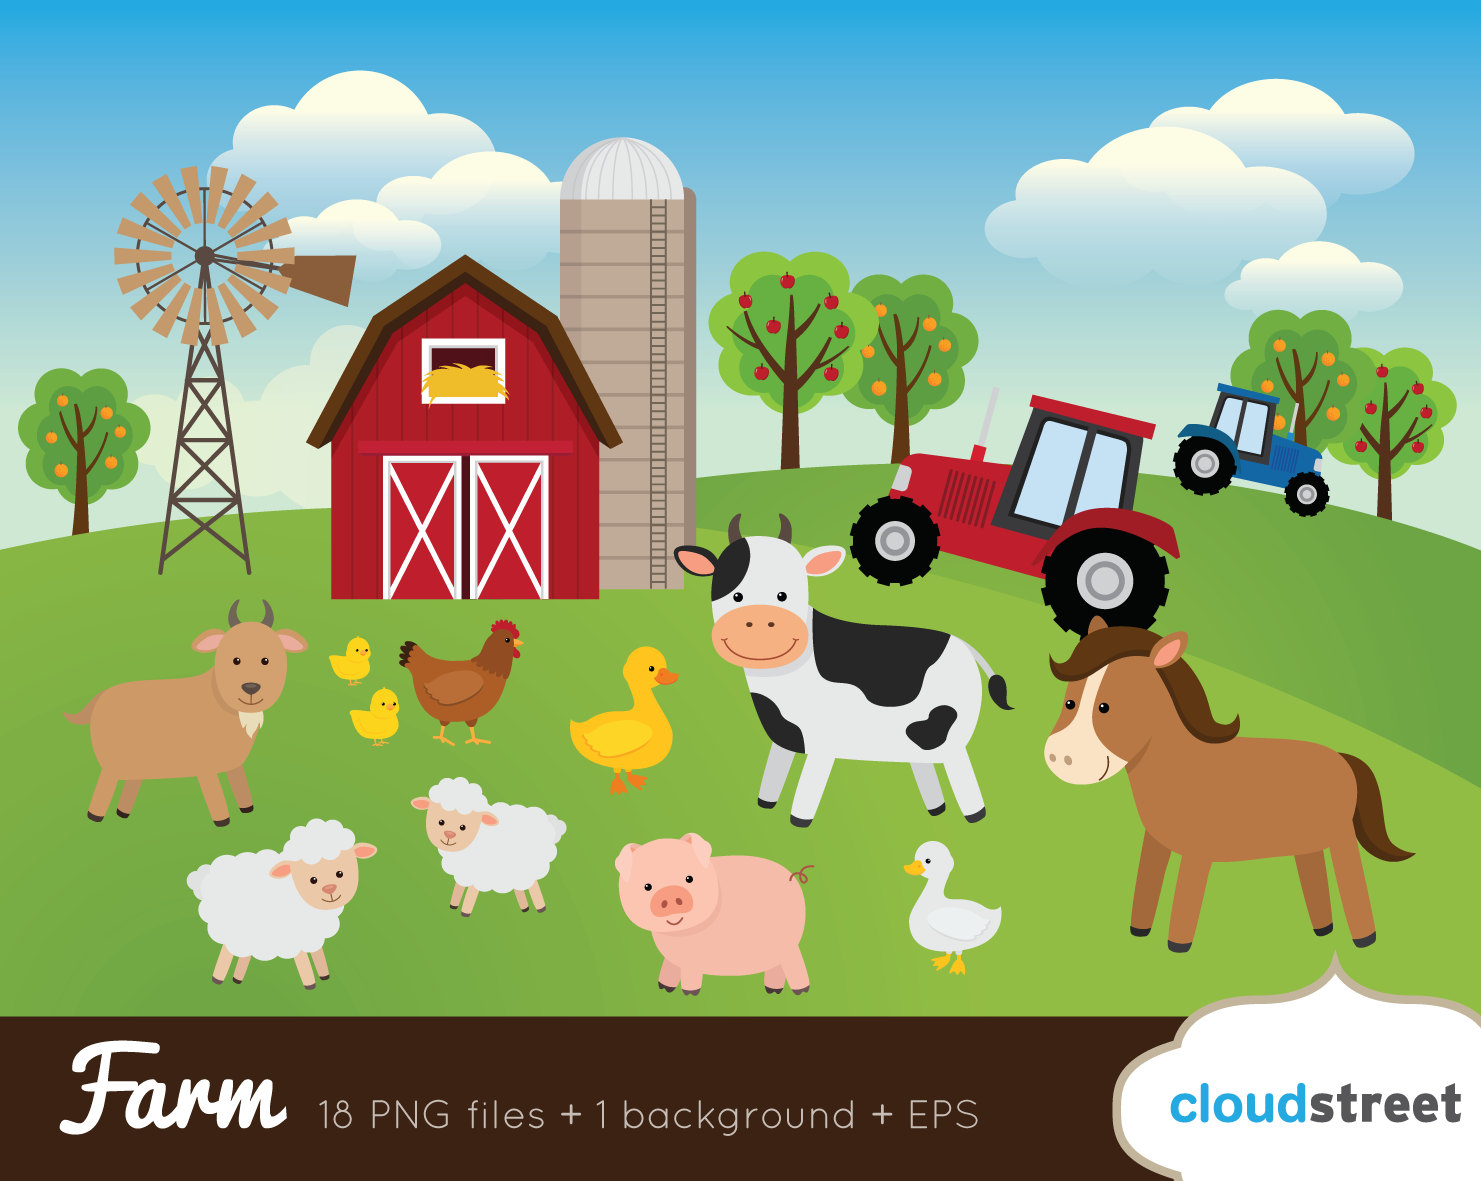 buy 2 get 1 free Farm Clip Art / Farm Animals Clipart / barnyard vector graphics illustration / barn cow sheep pig horse commercial use ok